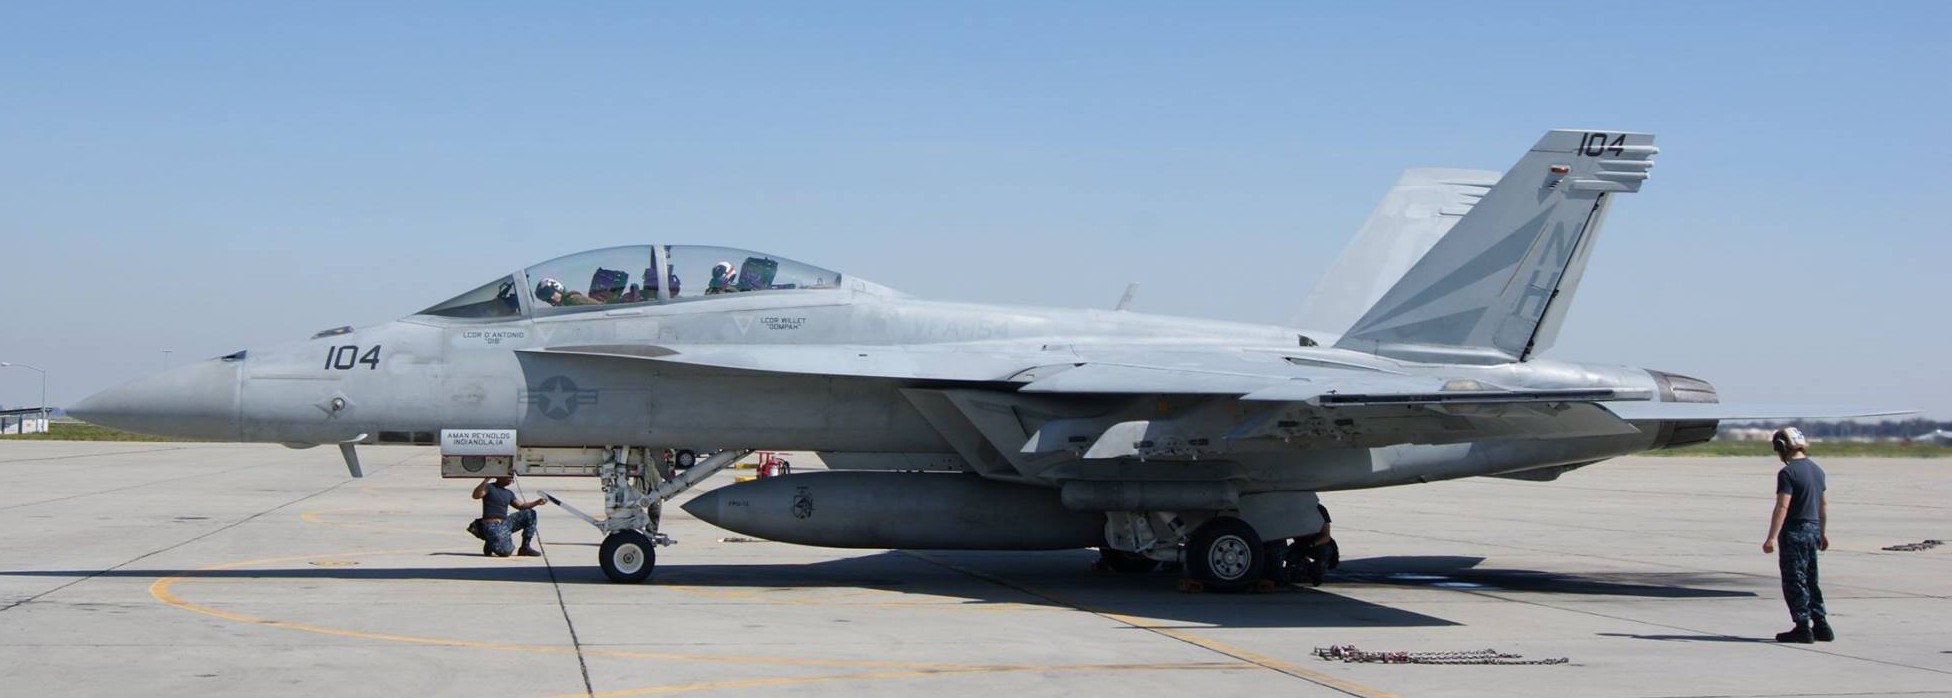 vfa-154 black knights strike fighter squadron navy f/a-18f super hornet 139 nas lemoore california